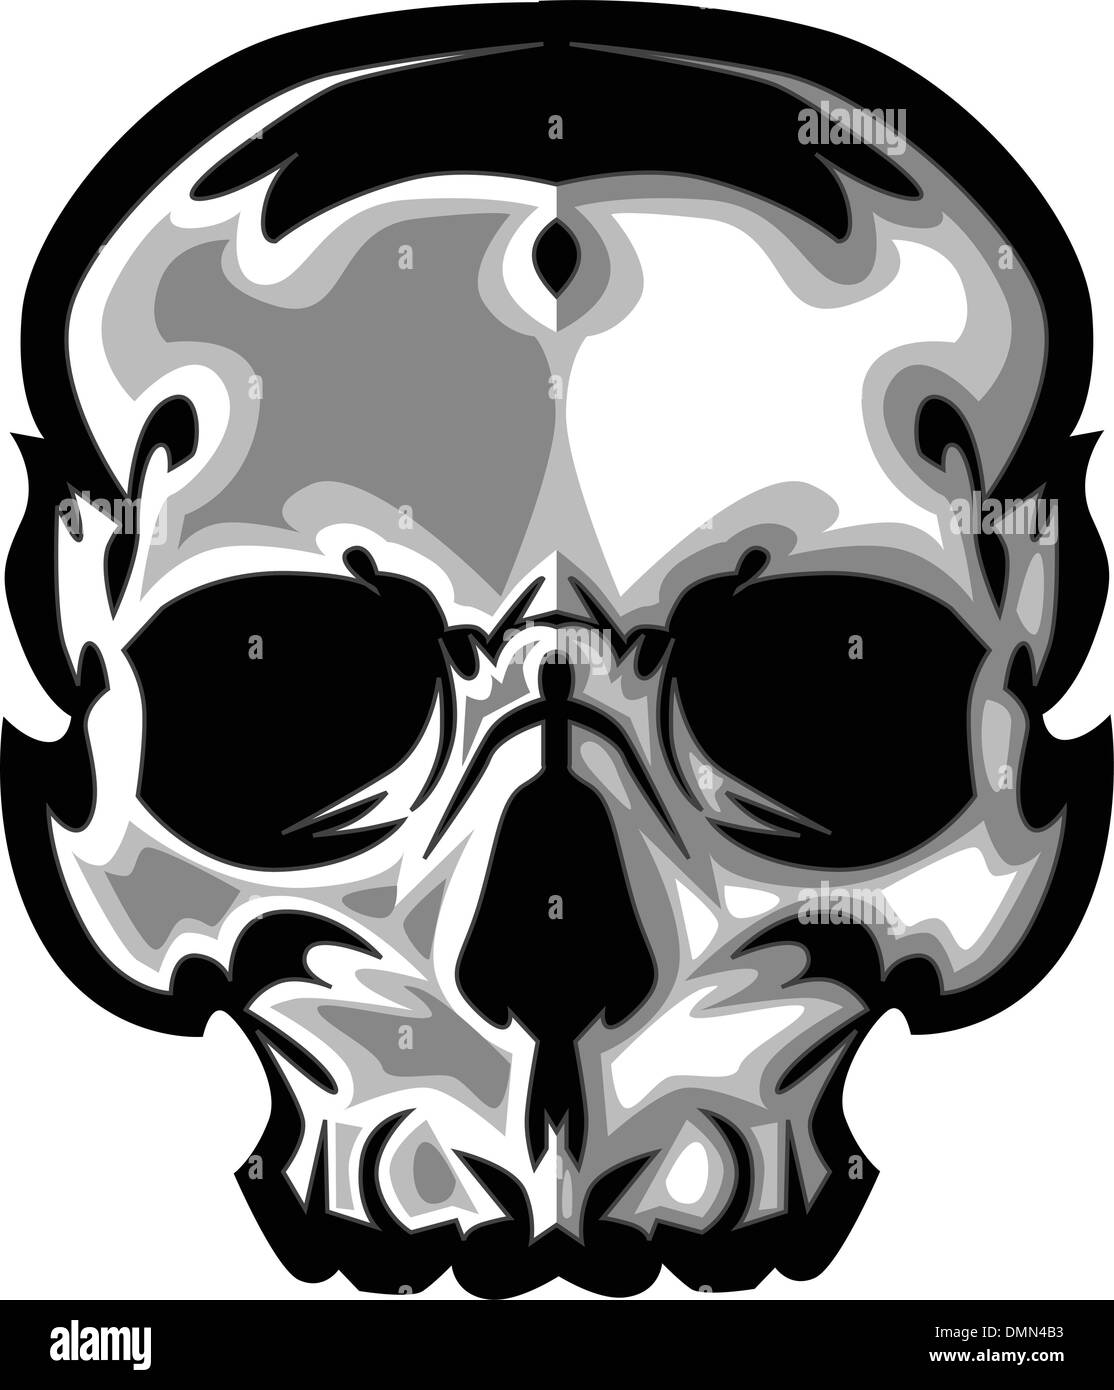 Skull Graphic Vector Image Stock Vector